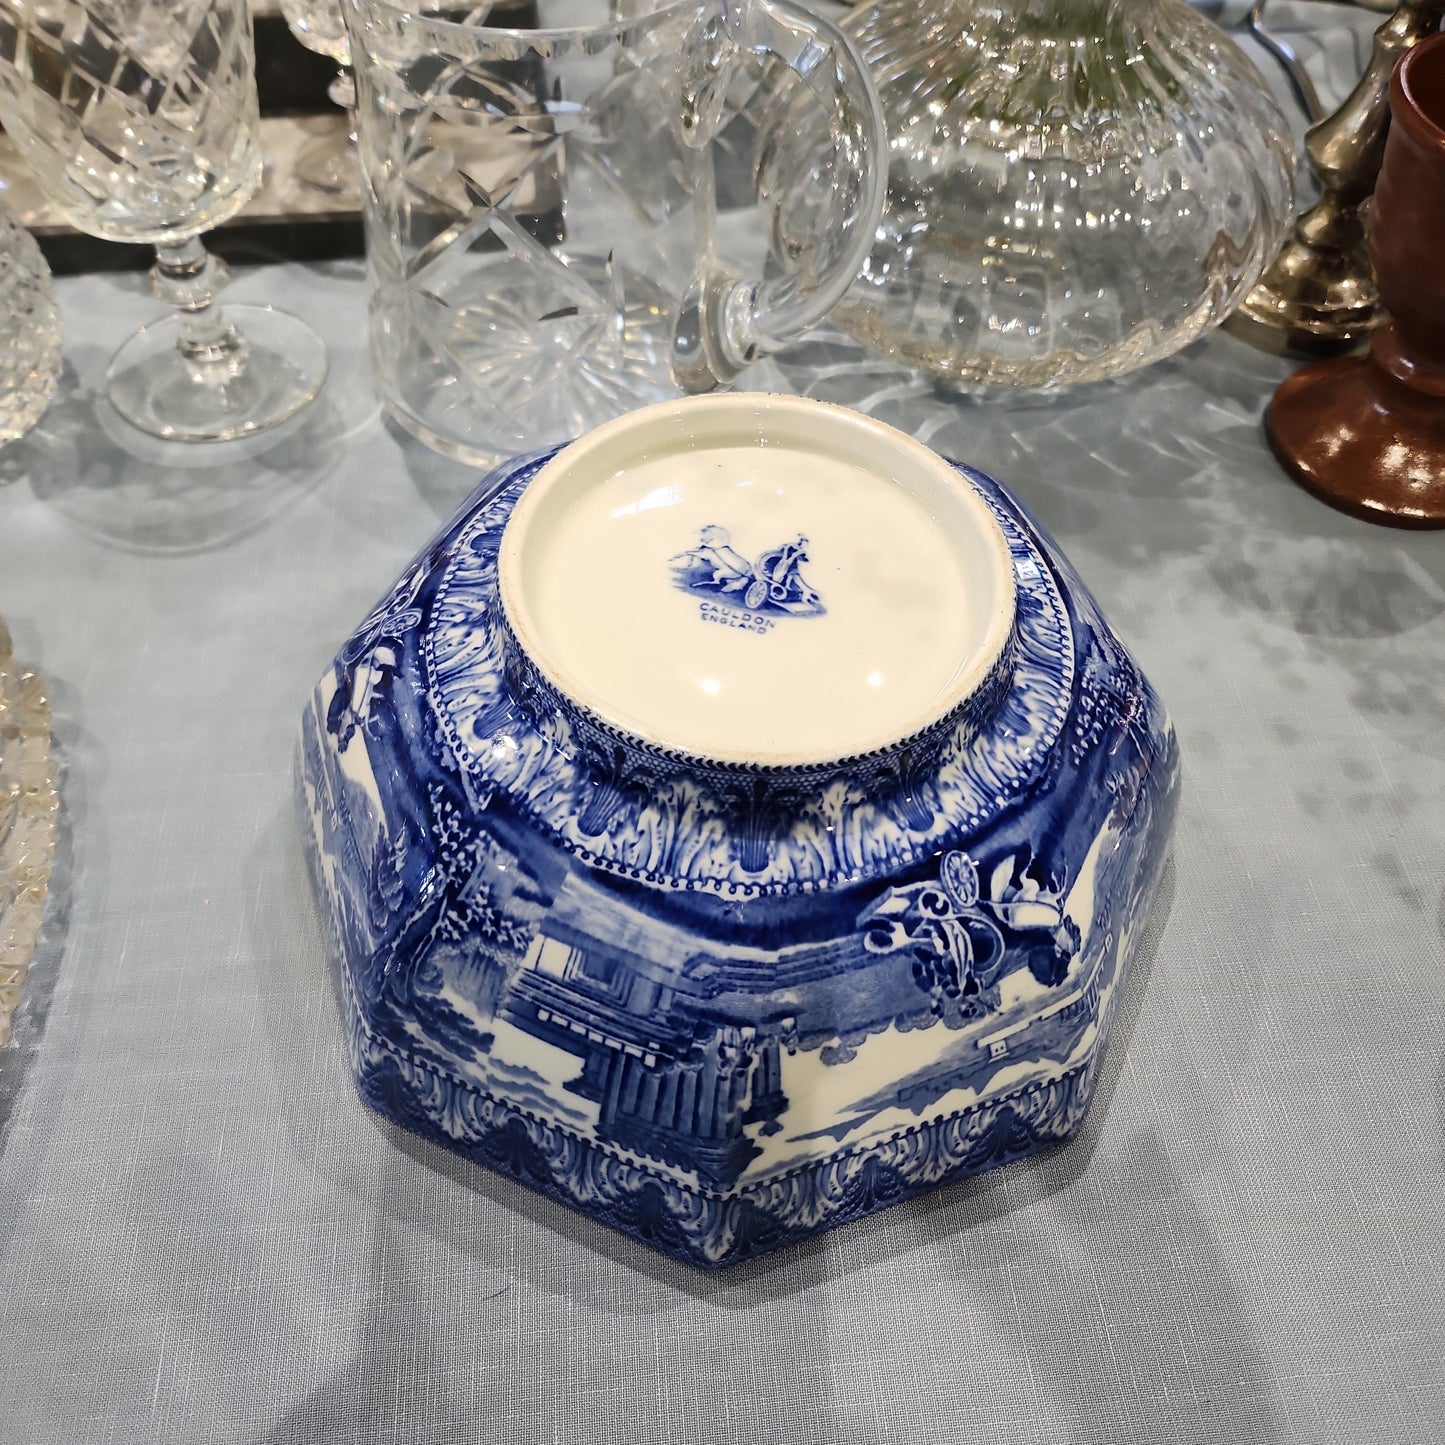 Antique Cauldon big blue and white bowl